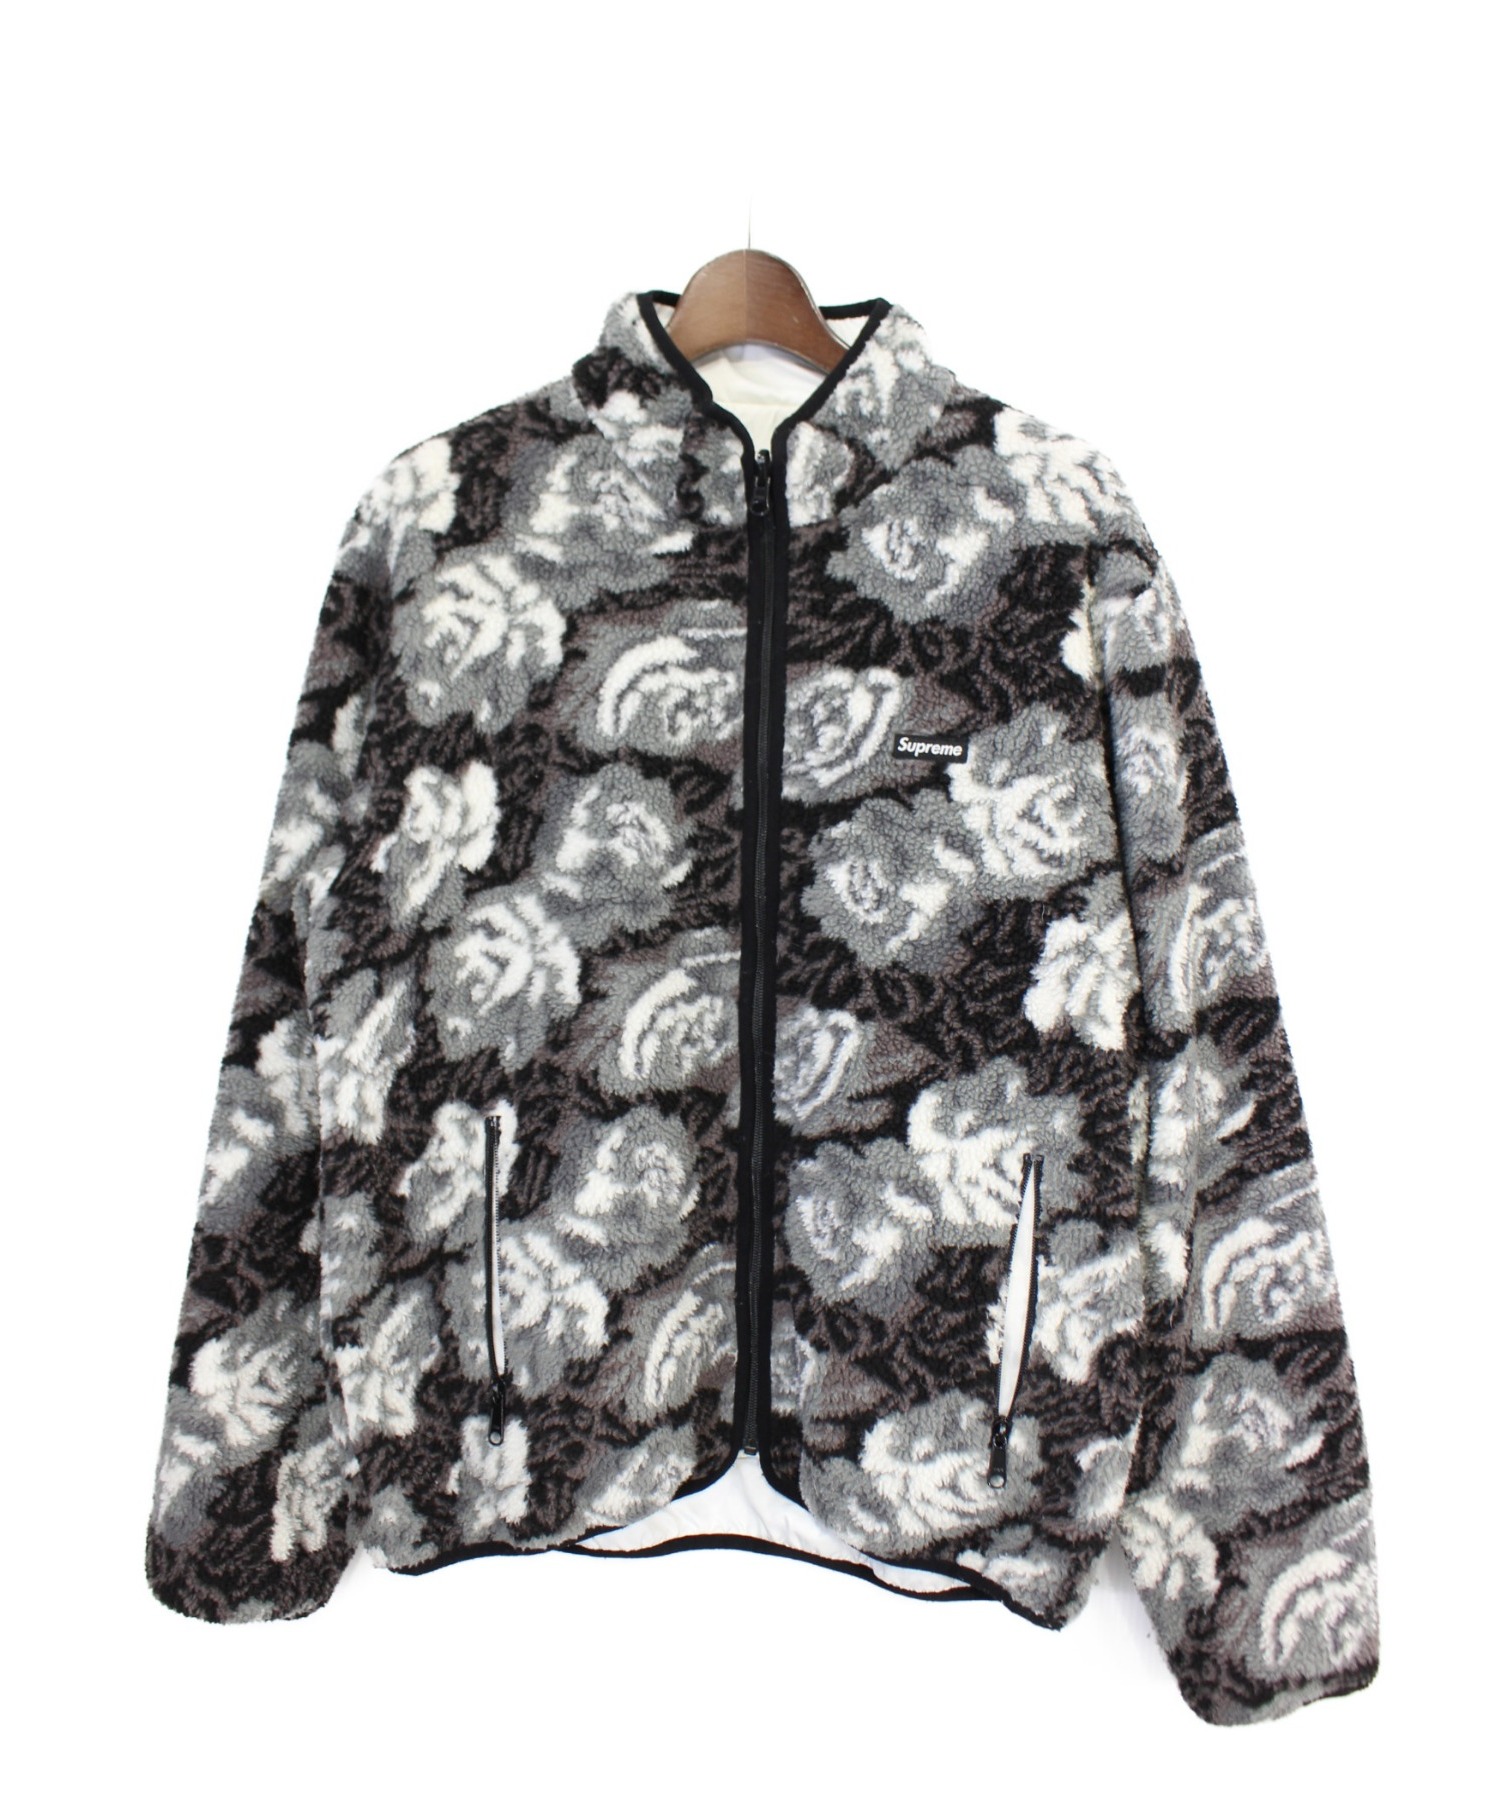 Supreme Rose Reversible Fleece Jacket